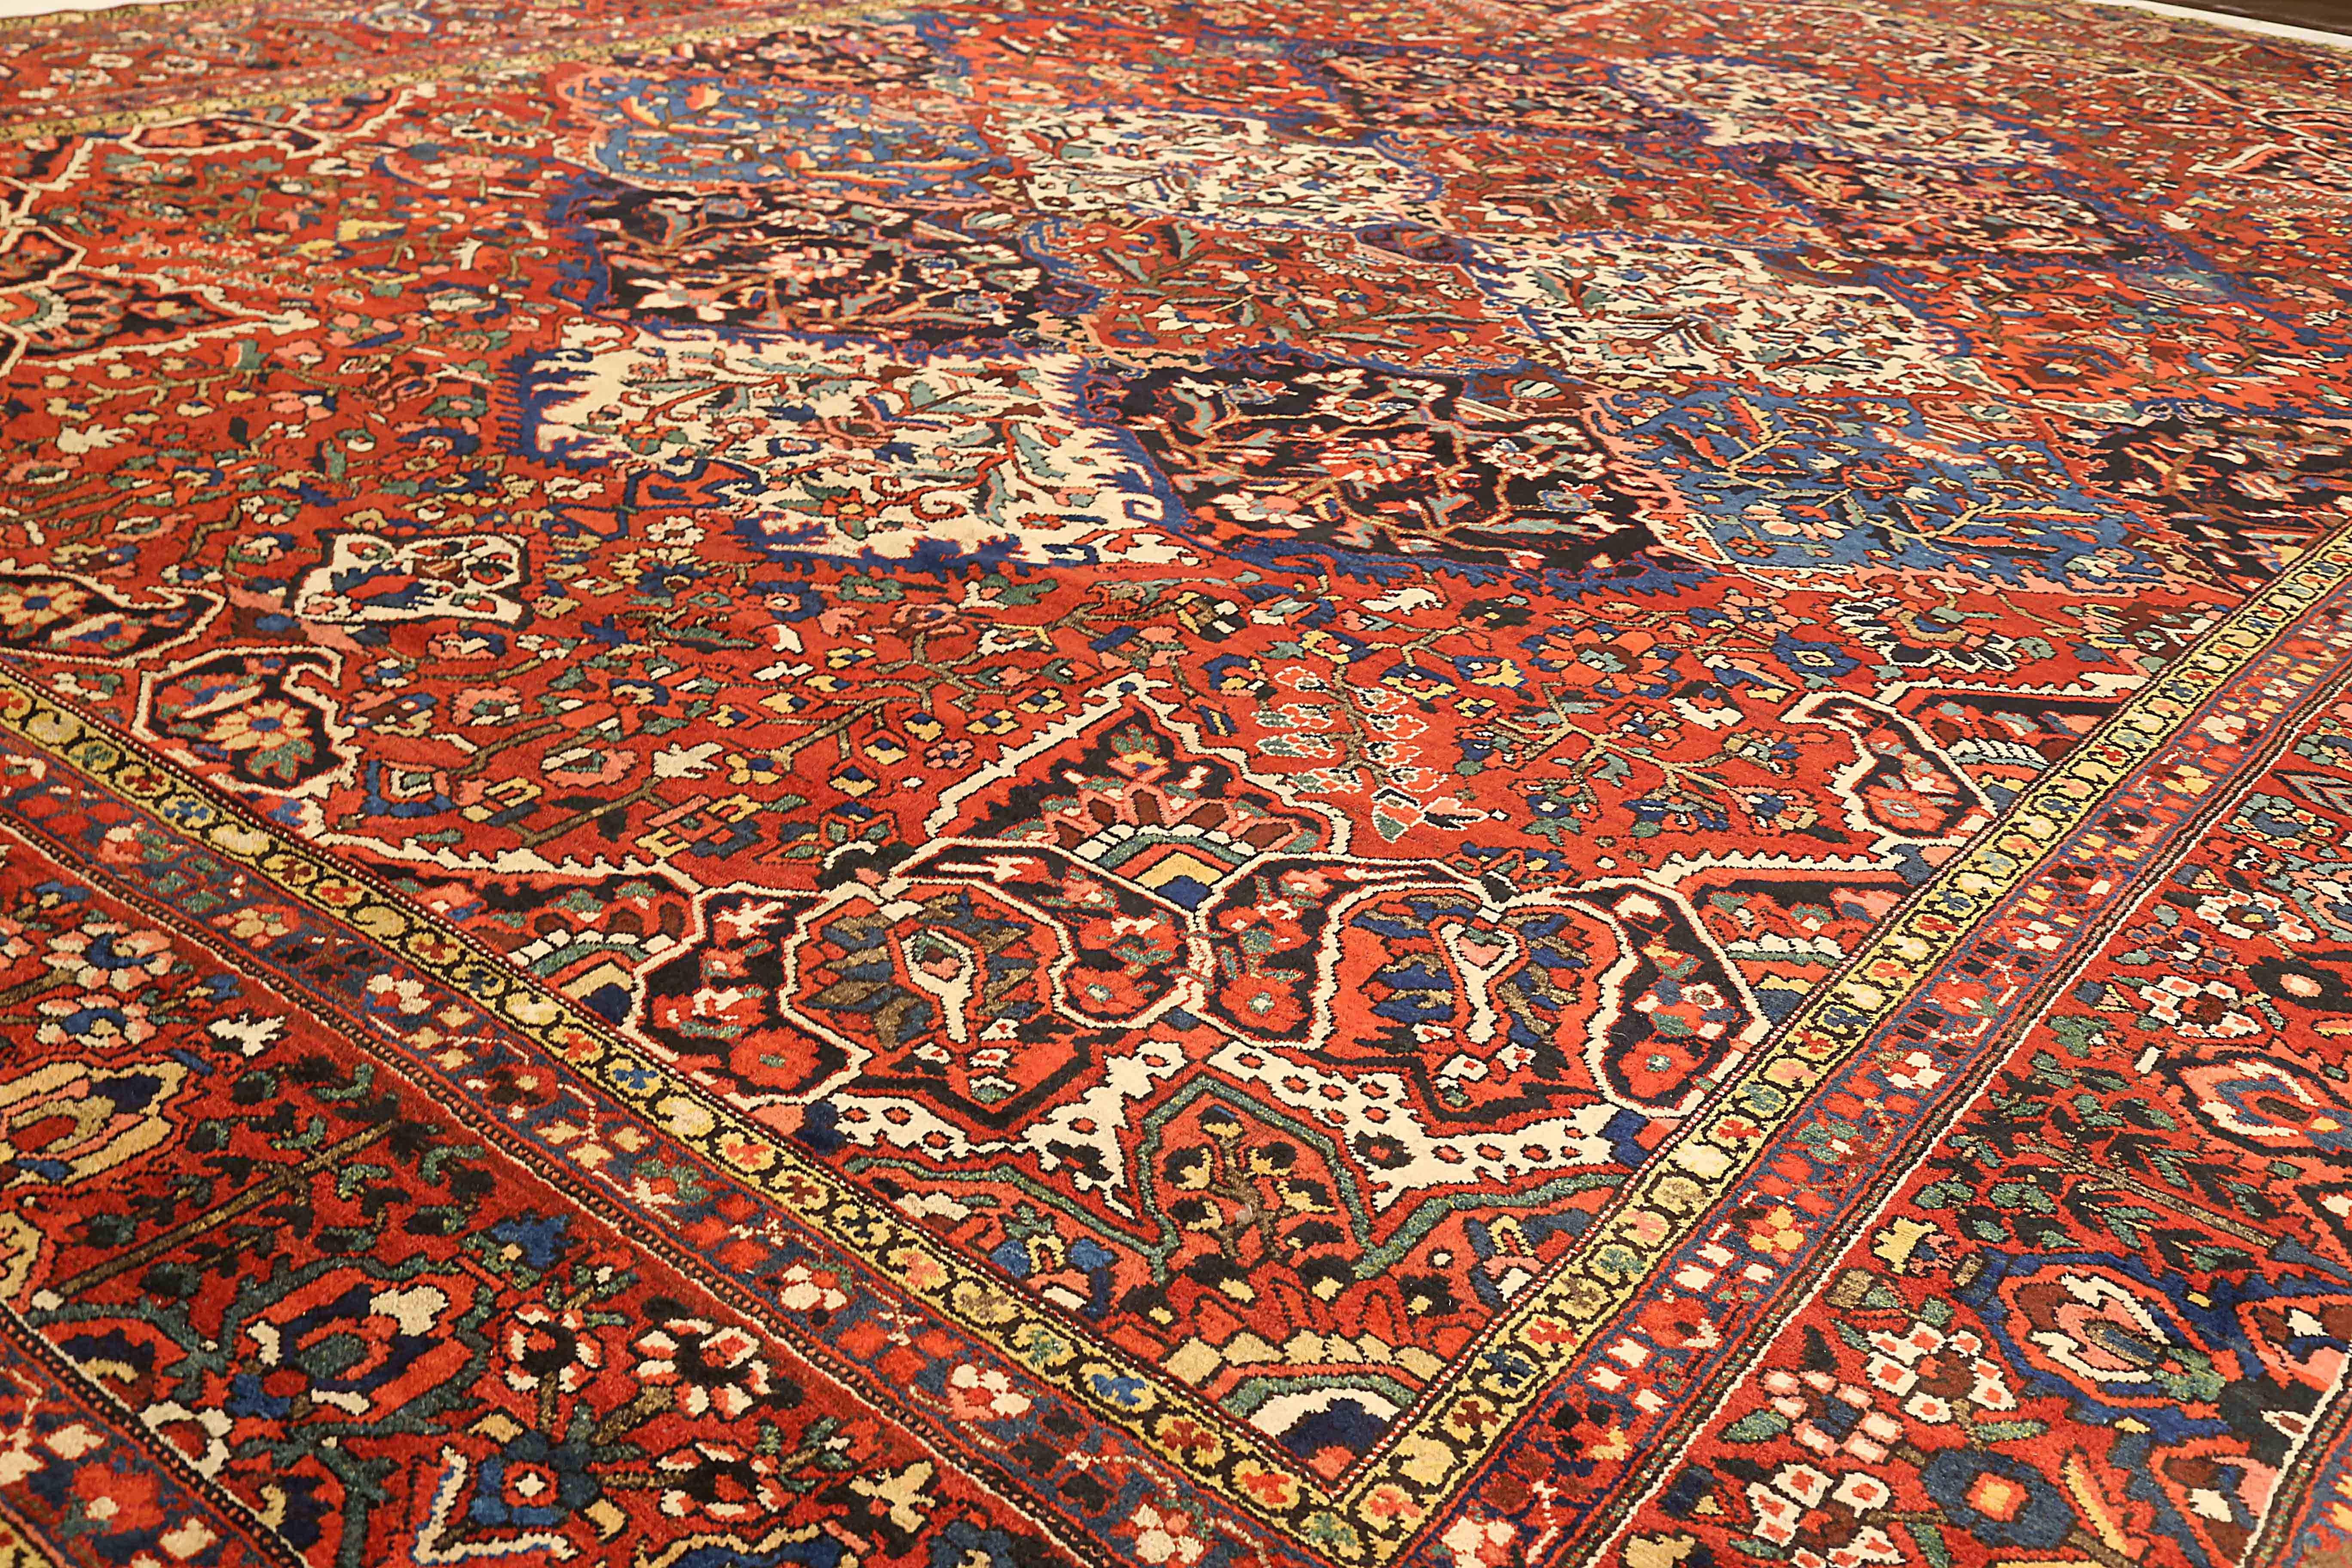 Other Antique Persian Area Rug Bakhtiar Design For Sale